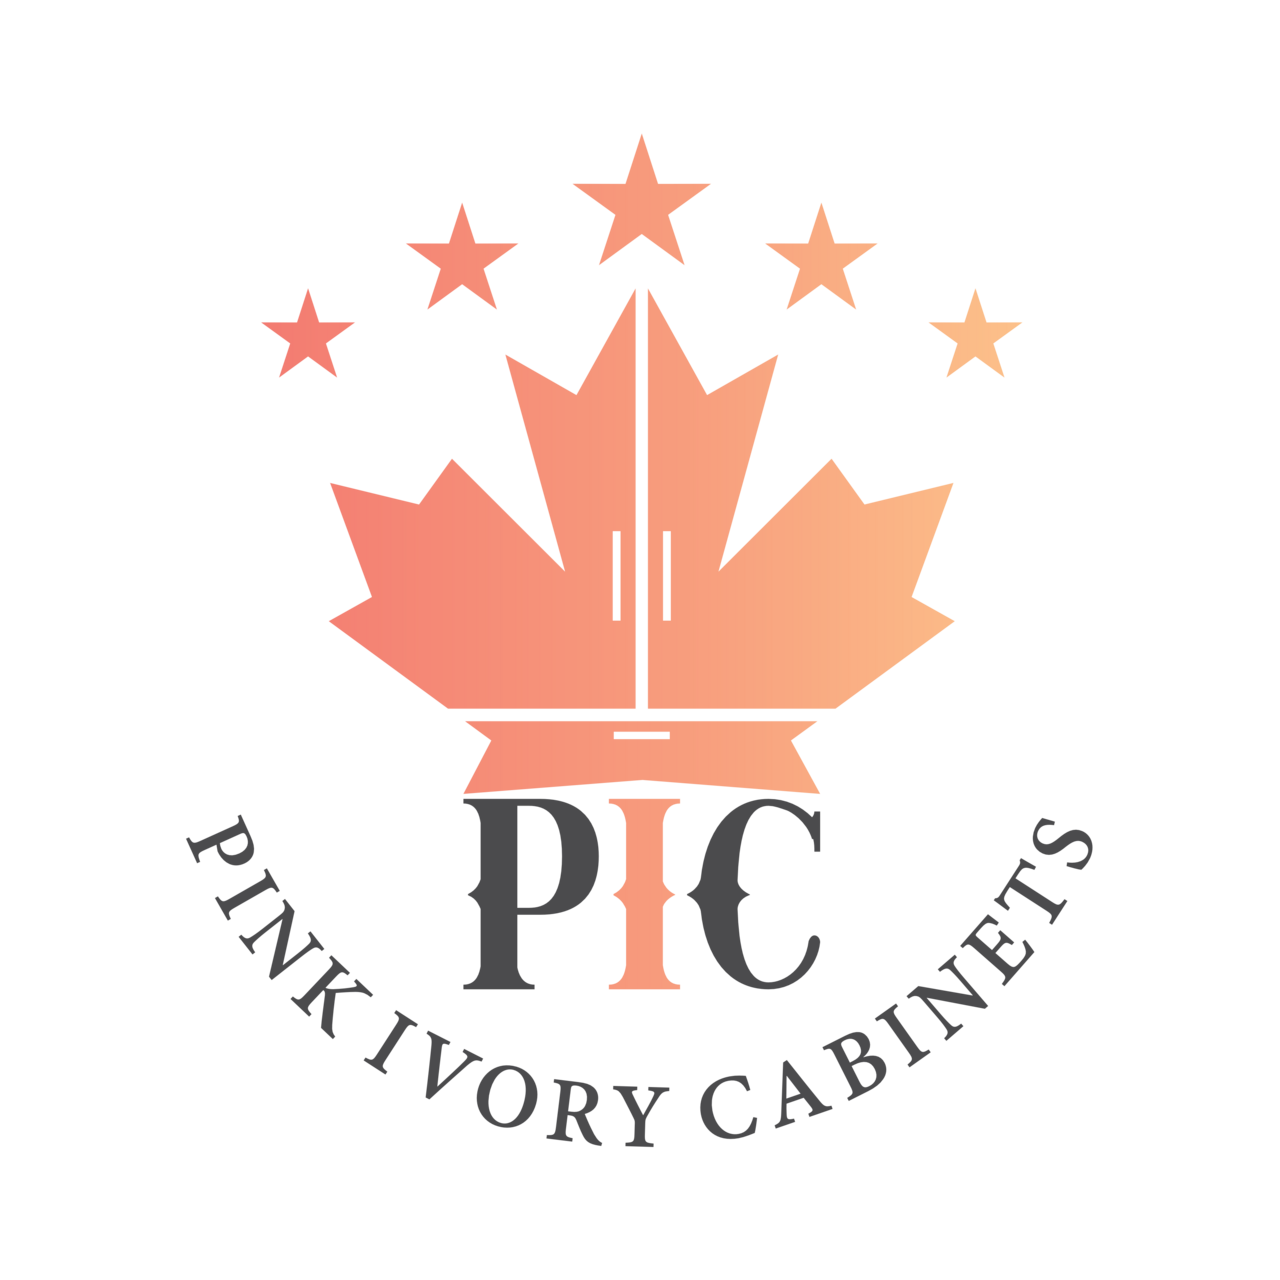 Pink Ivory Cabinets Inc.'s logo